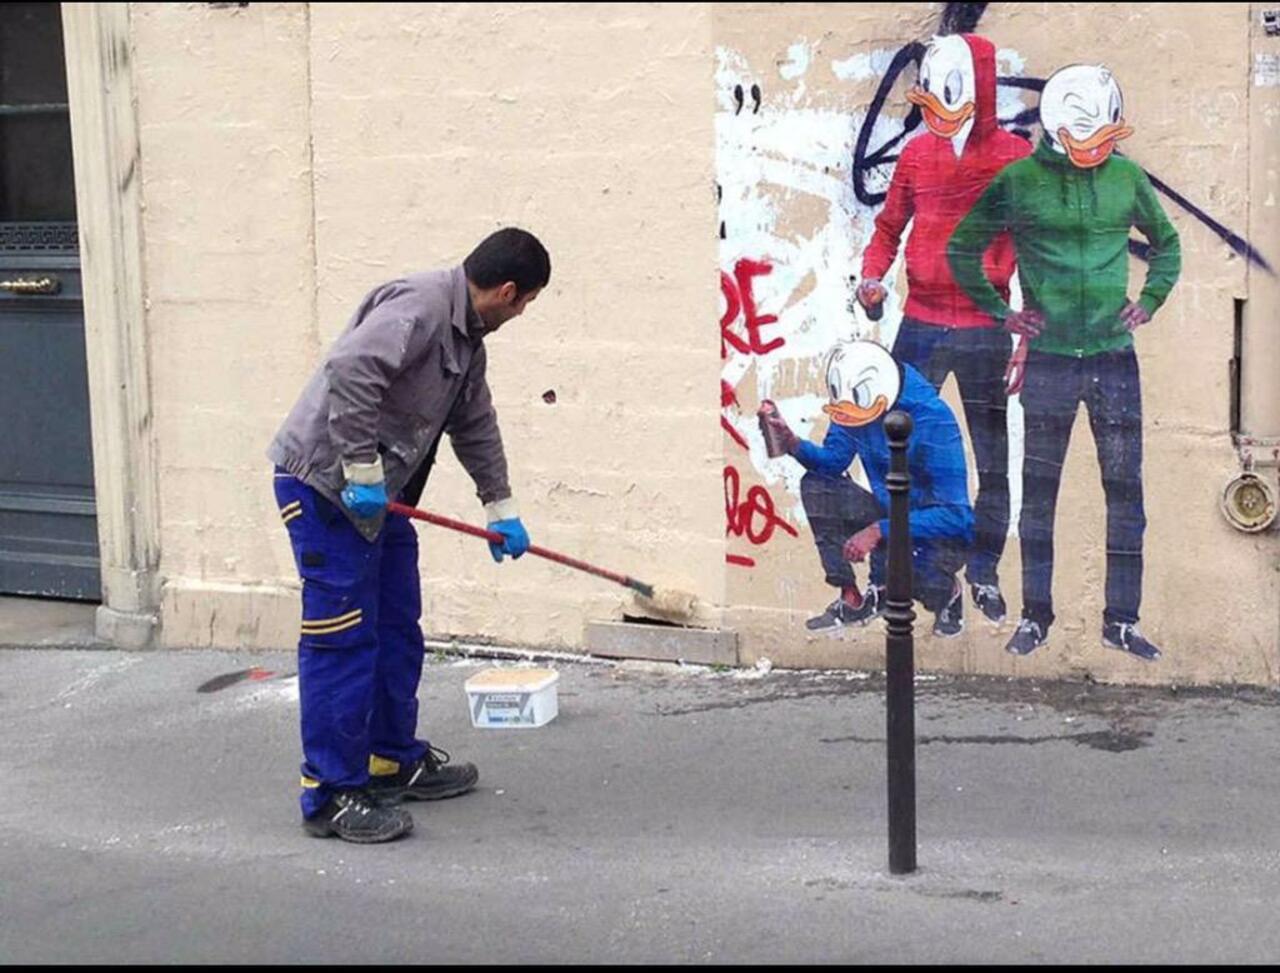 #graffiti removalist becomes part of the #streetart #mural in #paris #switch #bedifferent #art #arte http://t.co/zKn7DxspZi